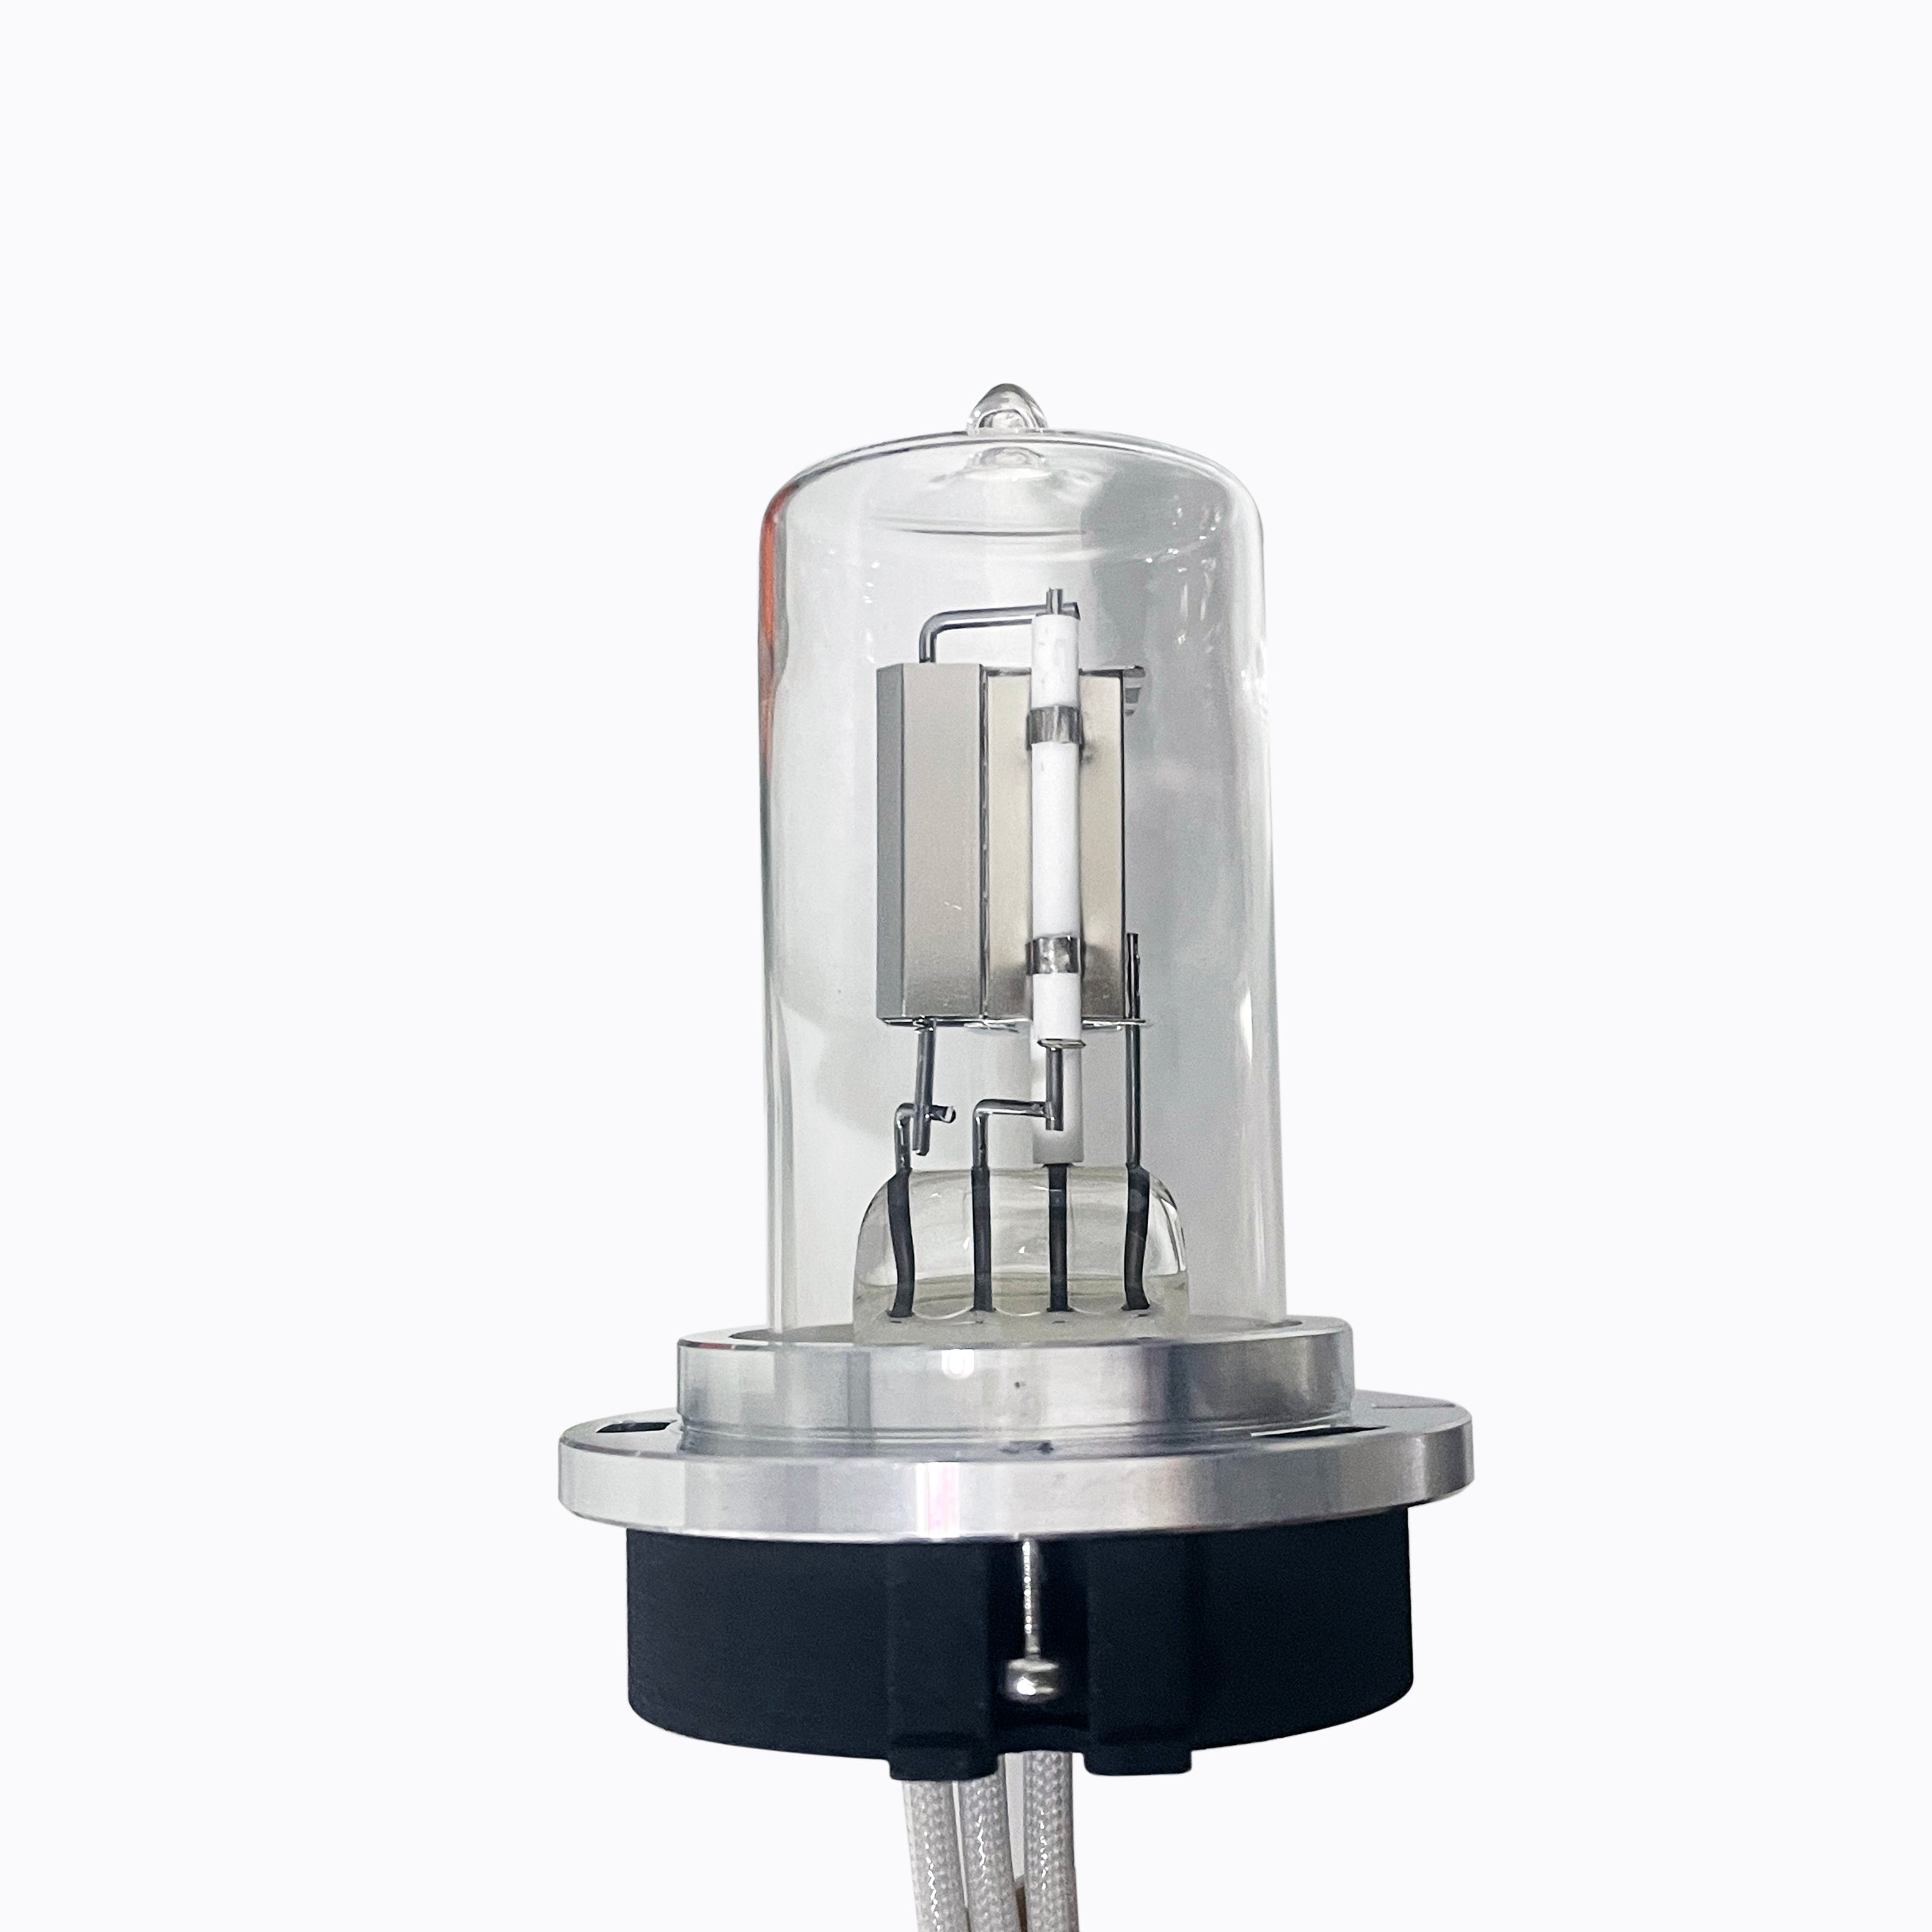 Alternative Agilent Deuterium Lamp G-1315, G-1365, G-7115 and G-7165 for DAD